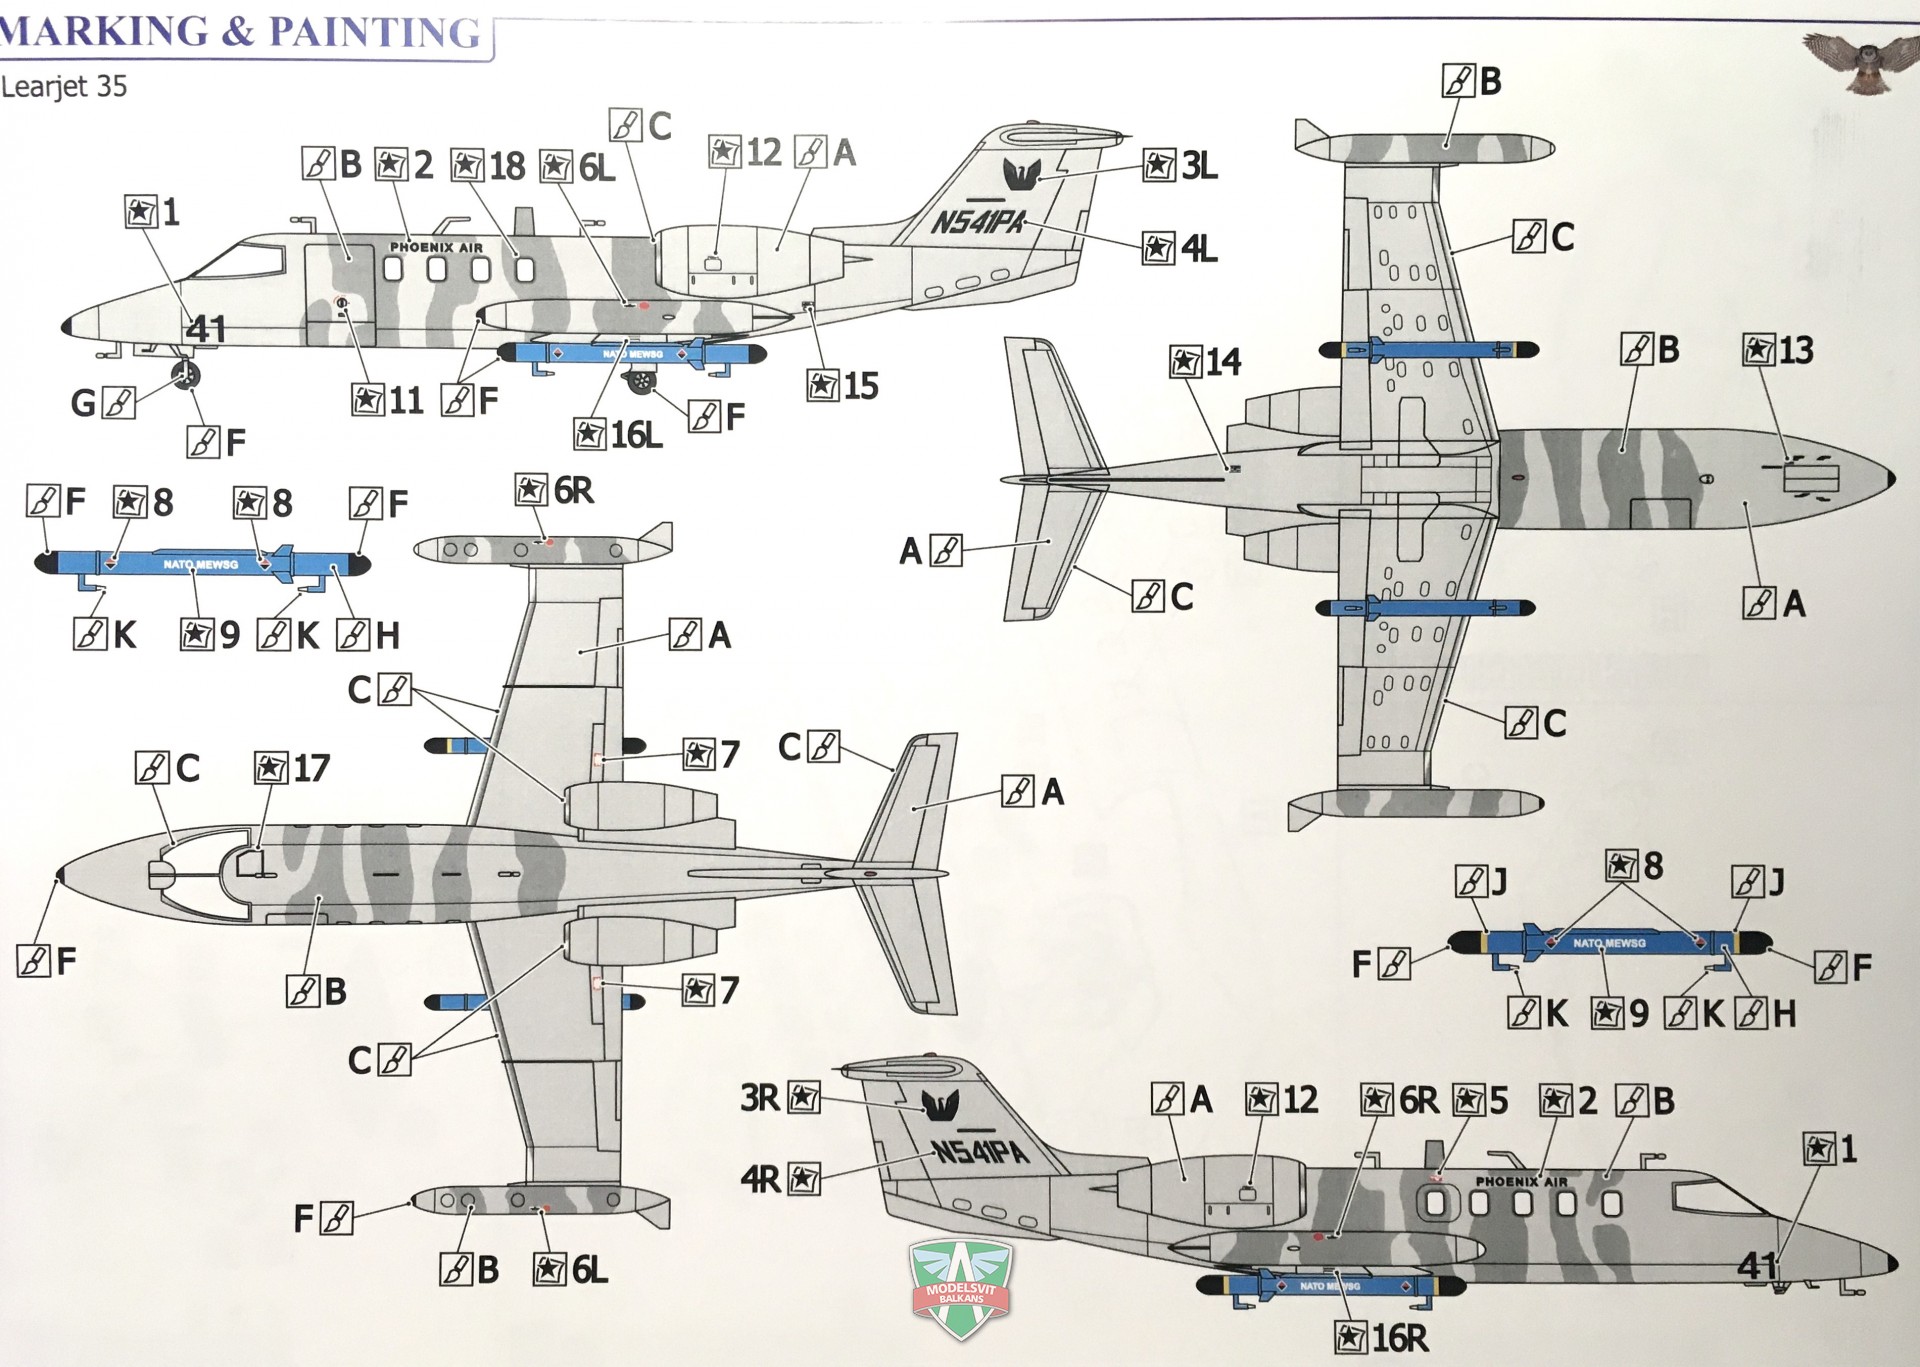 1/72 Amodel/Sova Learjet 35 kit # 72019 